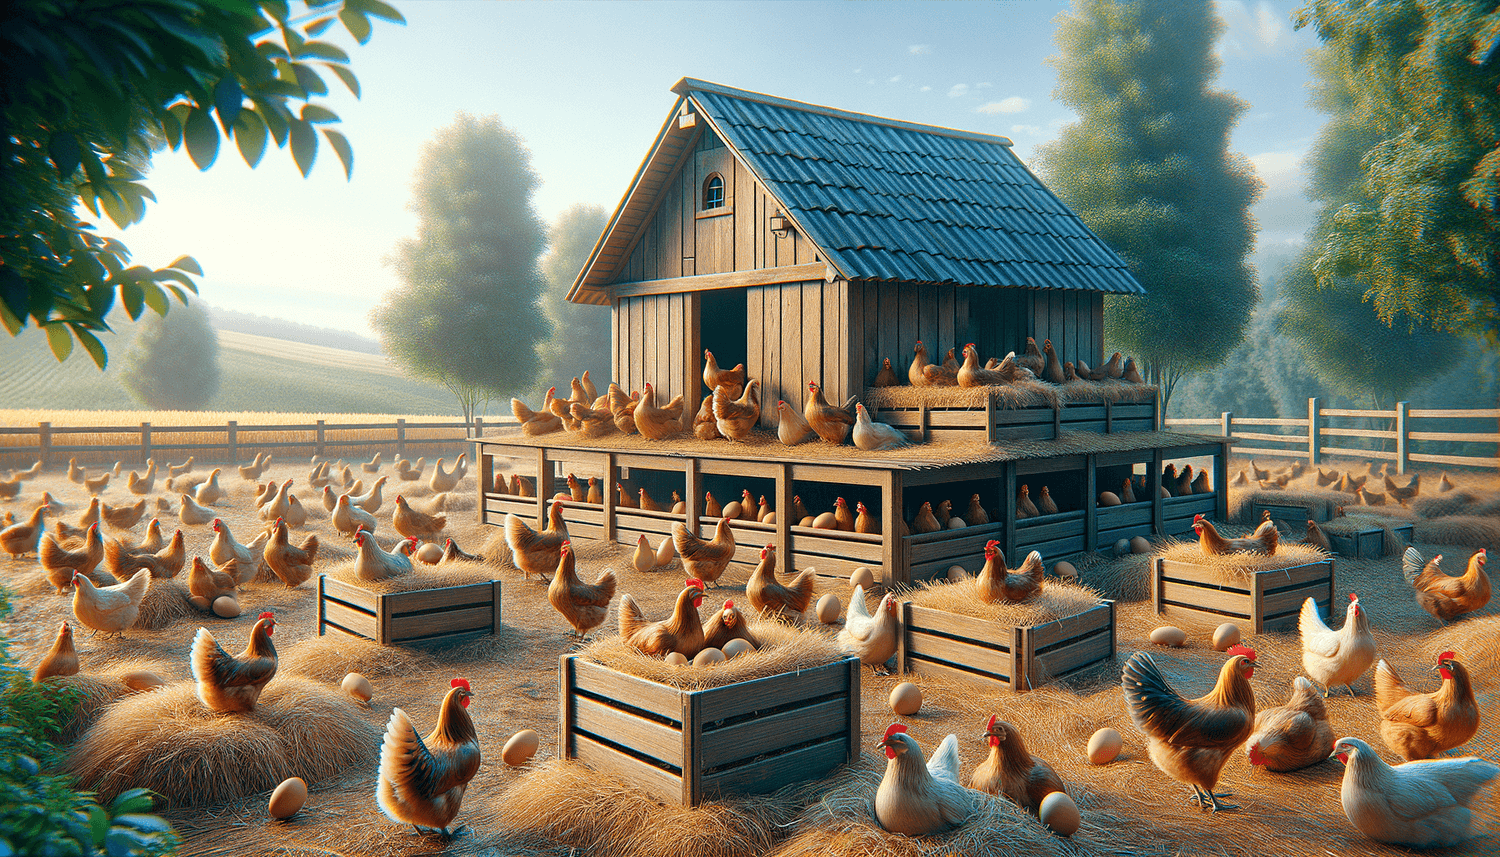 How Many Chickens Per Nesting Box?